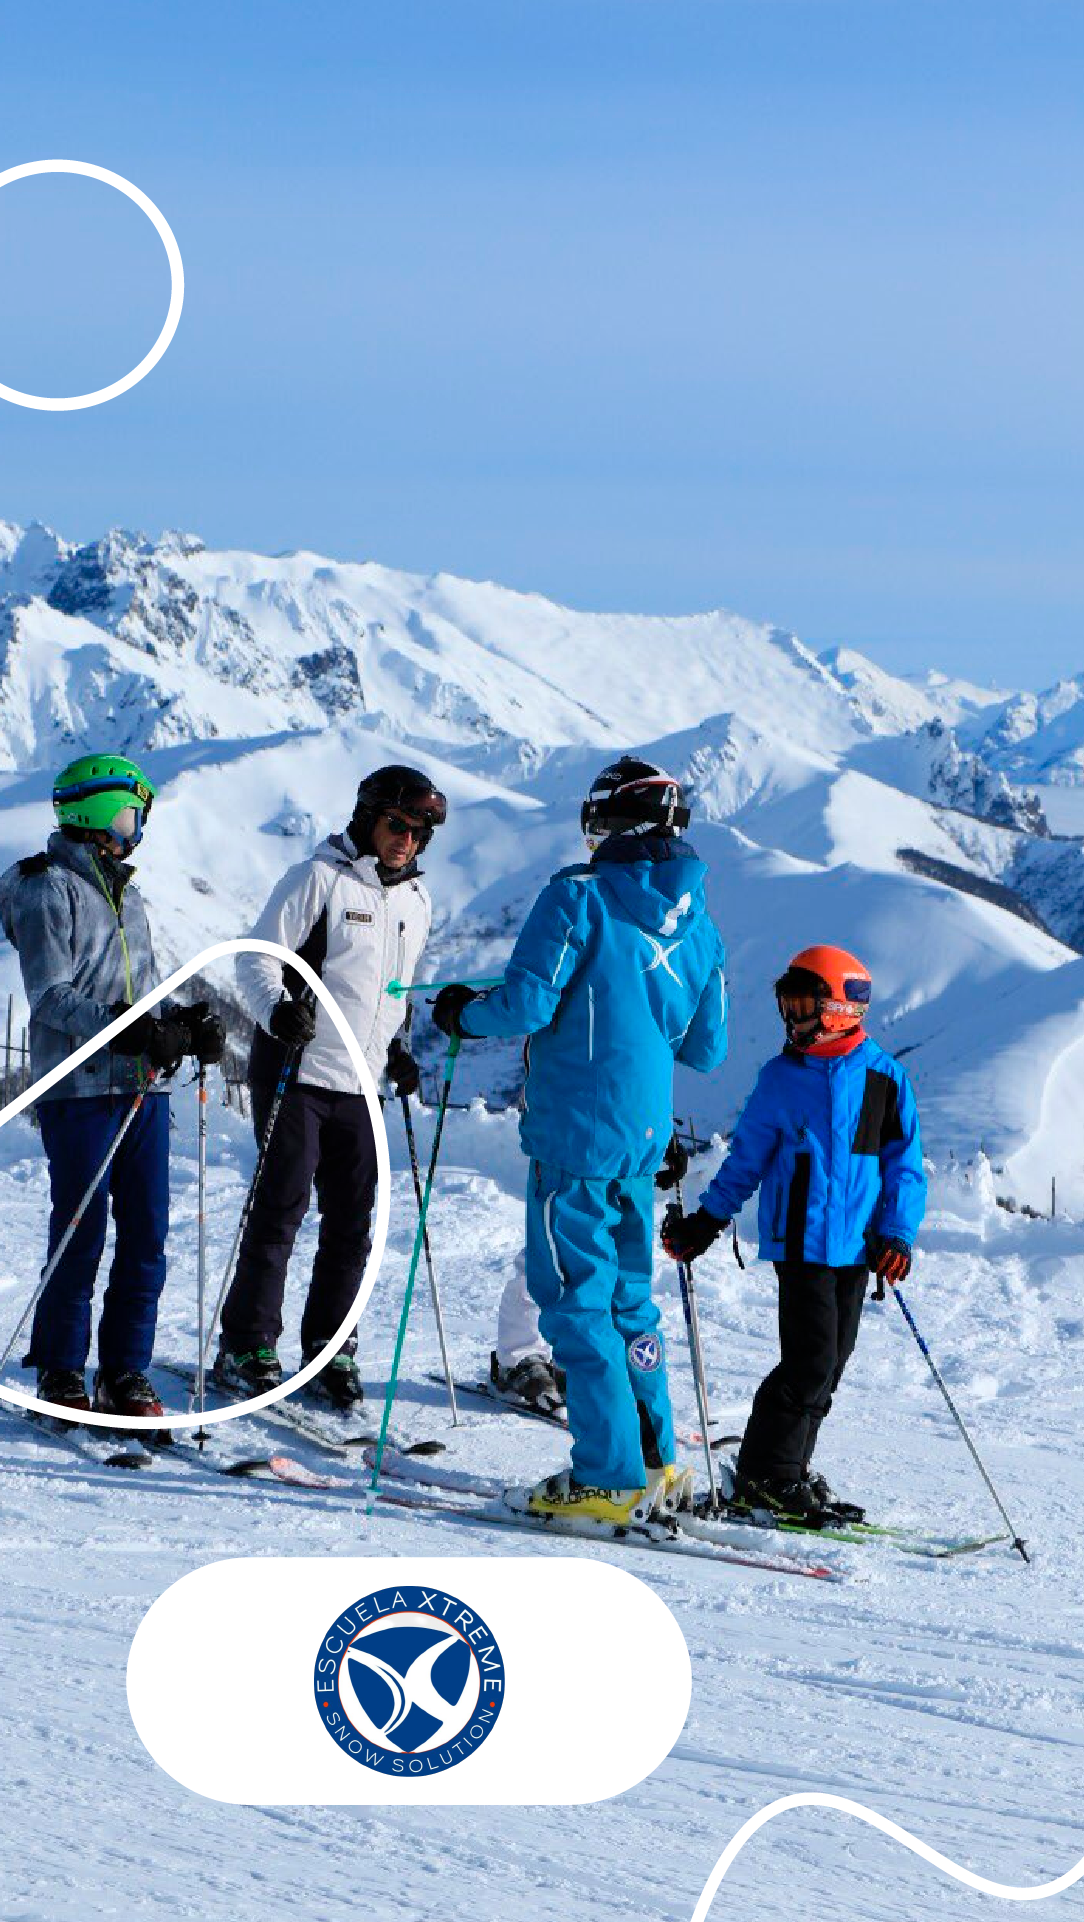 20% OFF en Xtreme Escuela de Ski & Snowboard